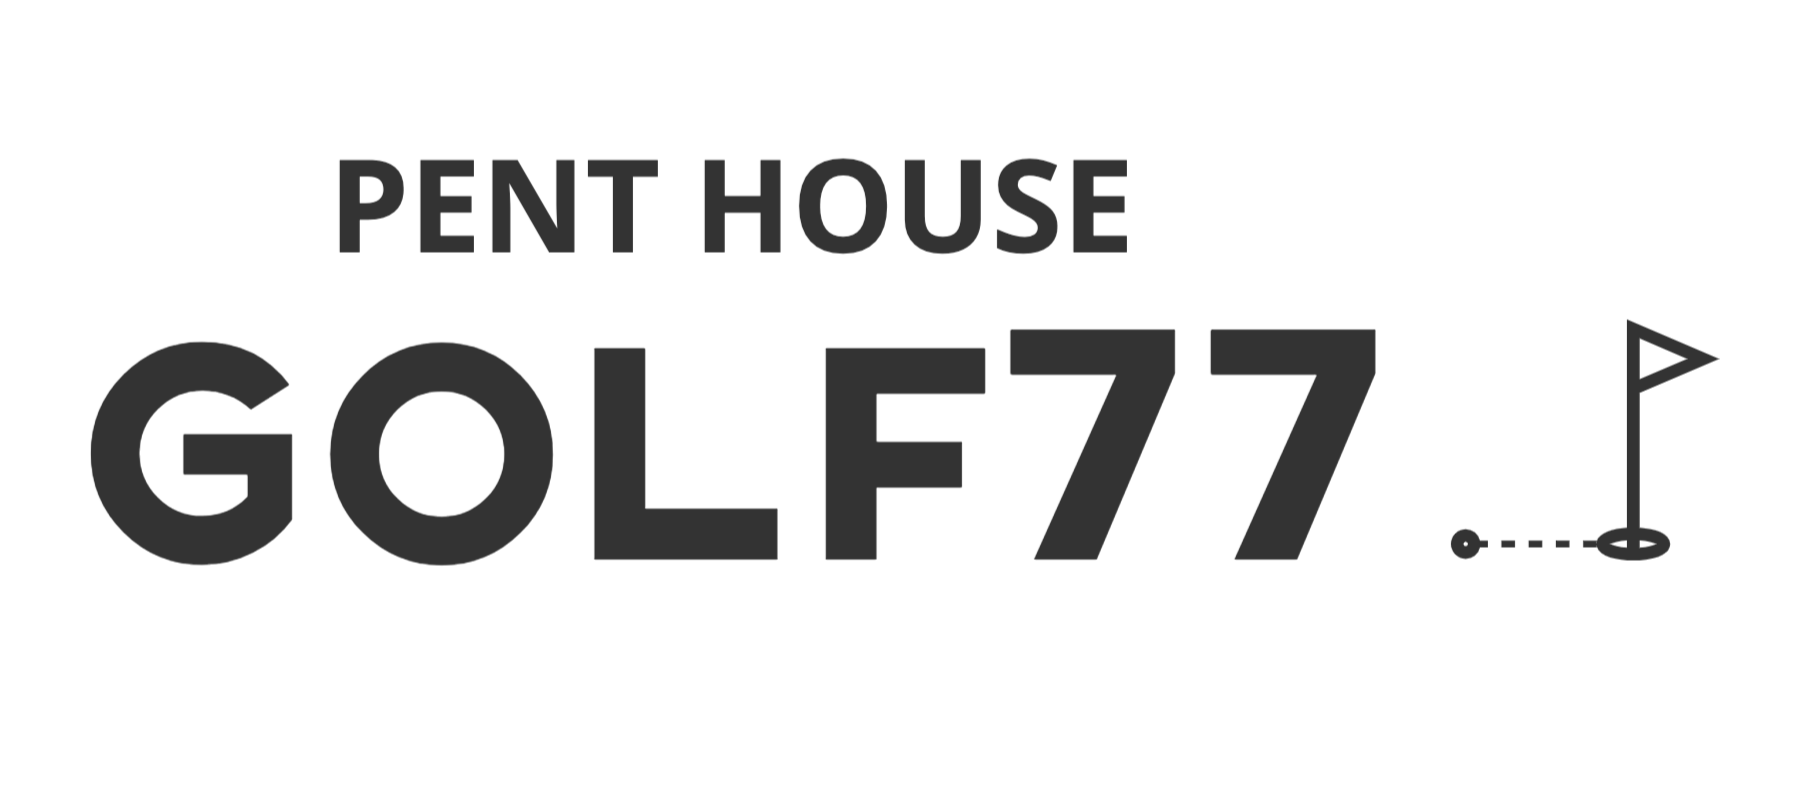 PENT HOUSE GOLF77